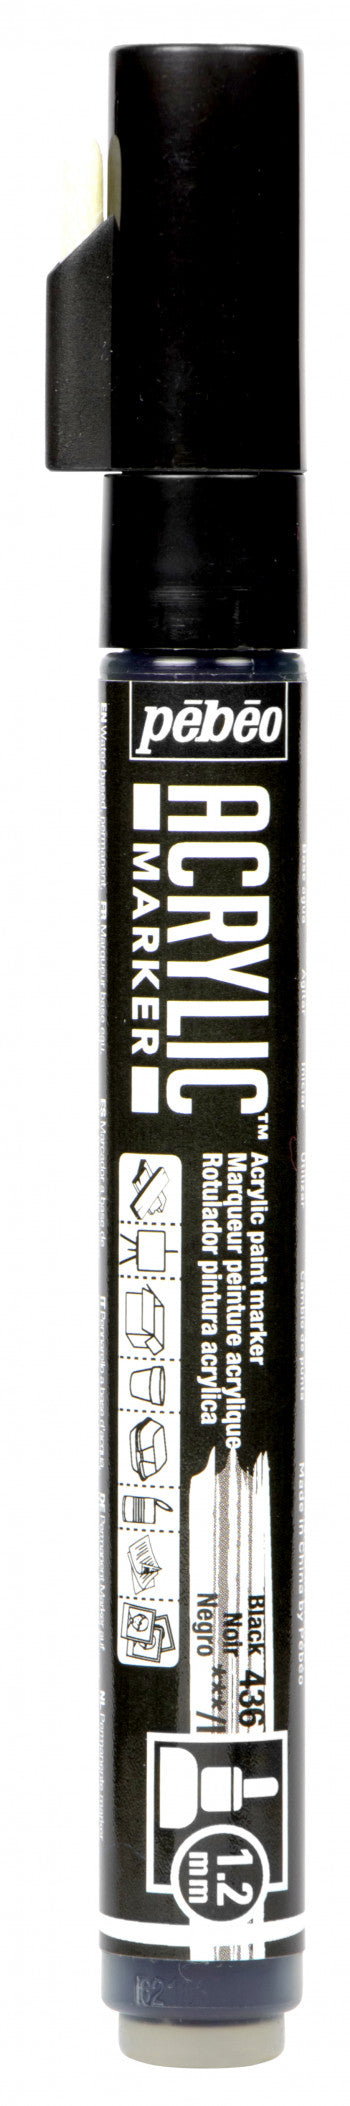 Acrylic Marker 1.2mm Pebeo Black - 436